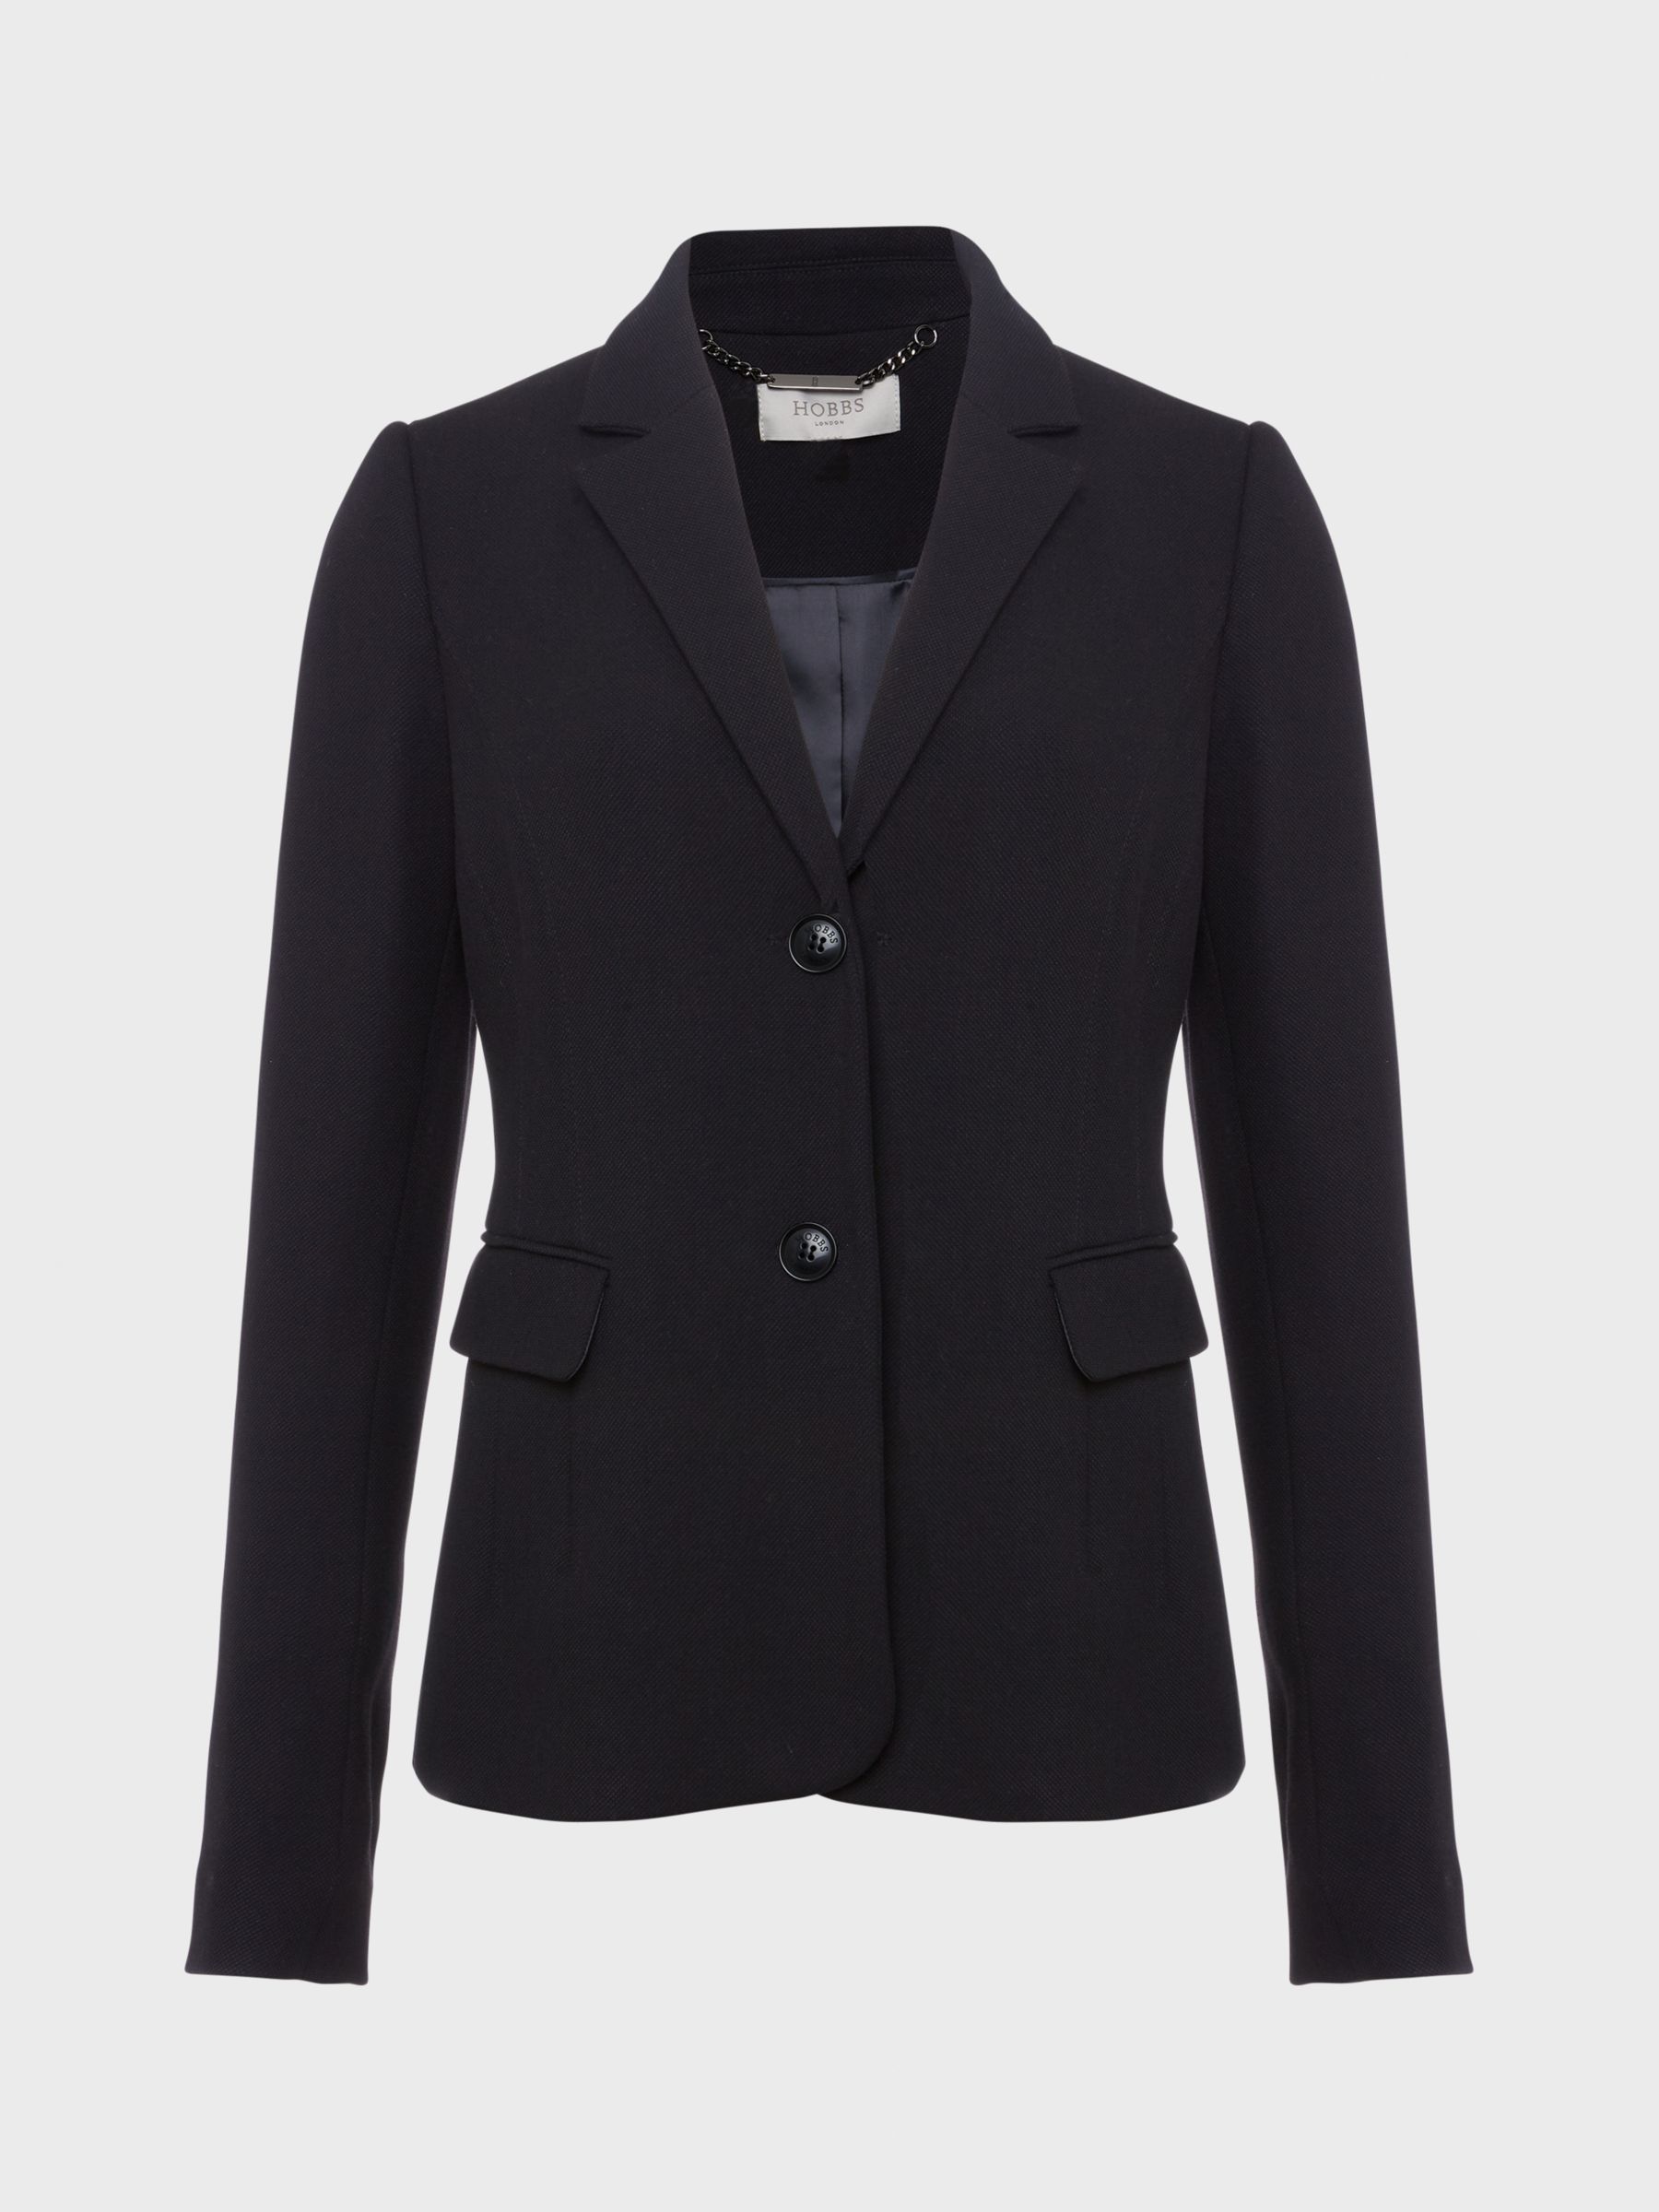 Buy Hobbs Charley Contemporary Suit Jacket, Black Online at johnlewis.com